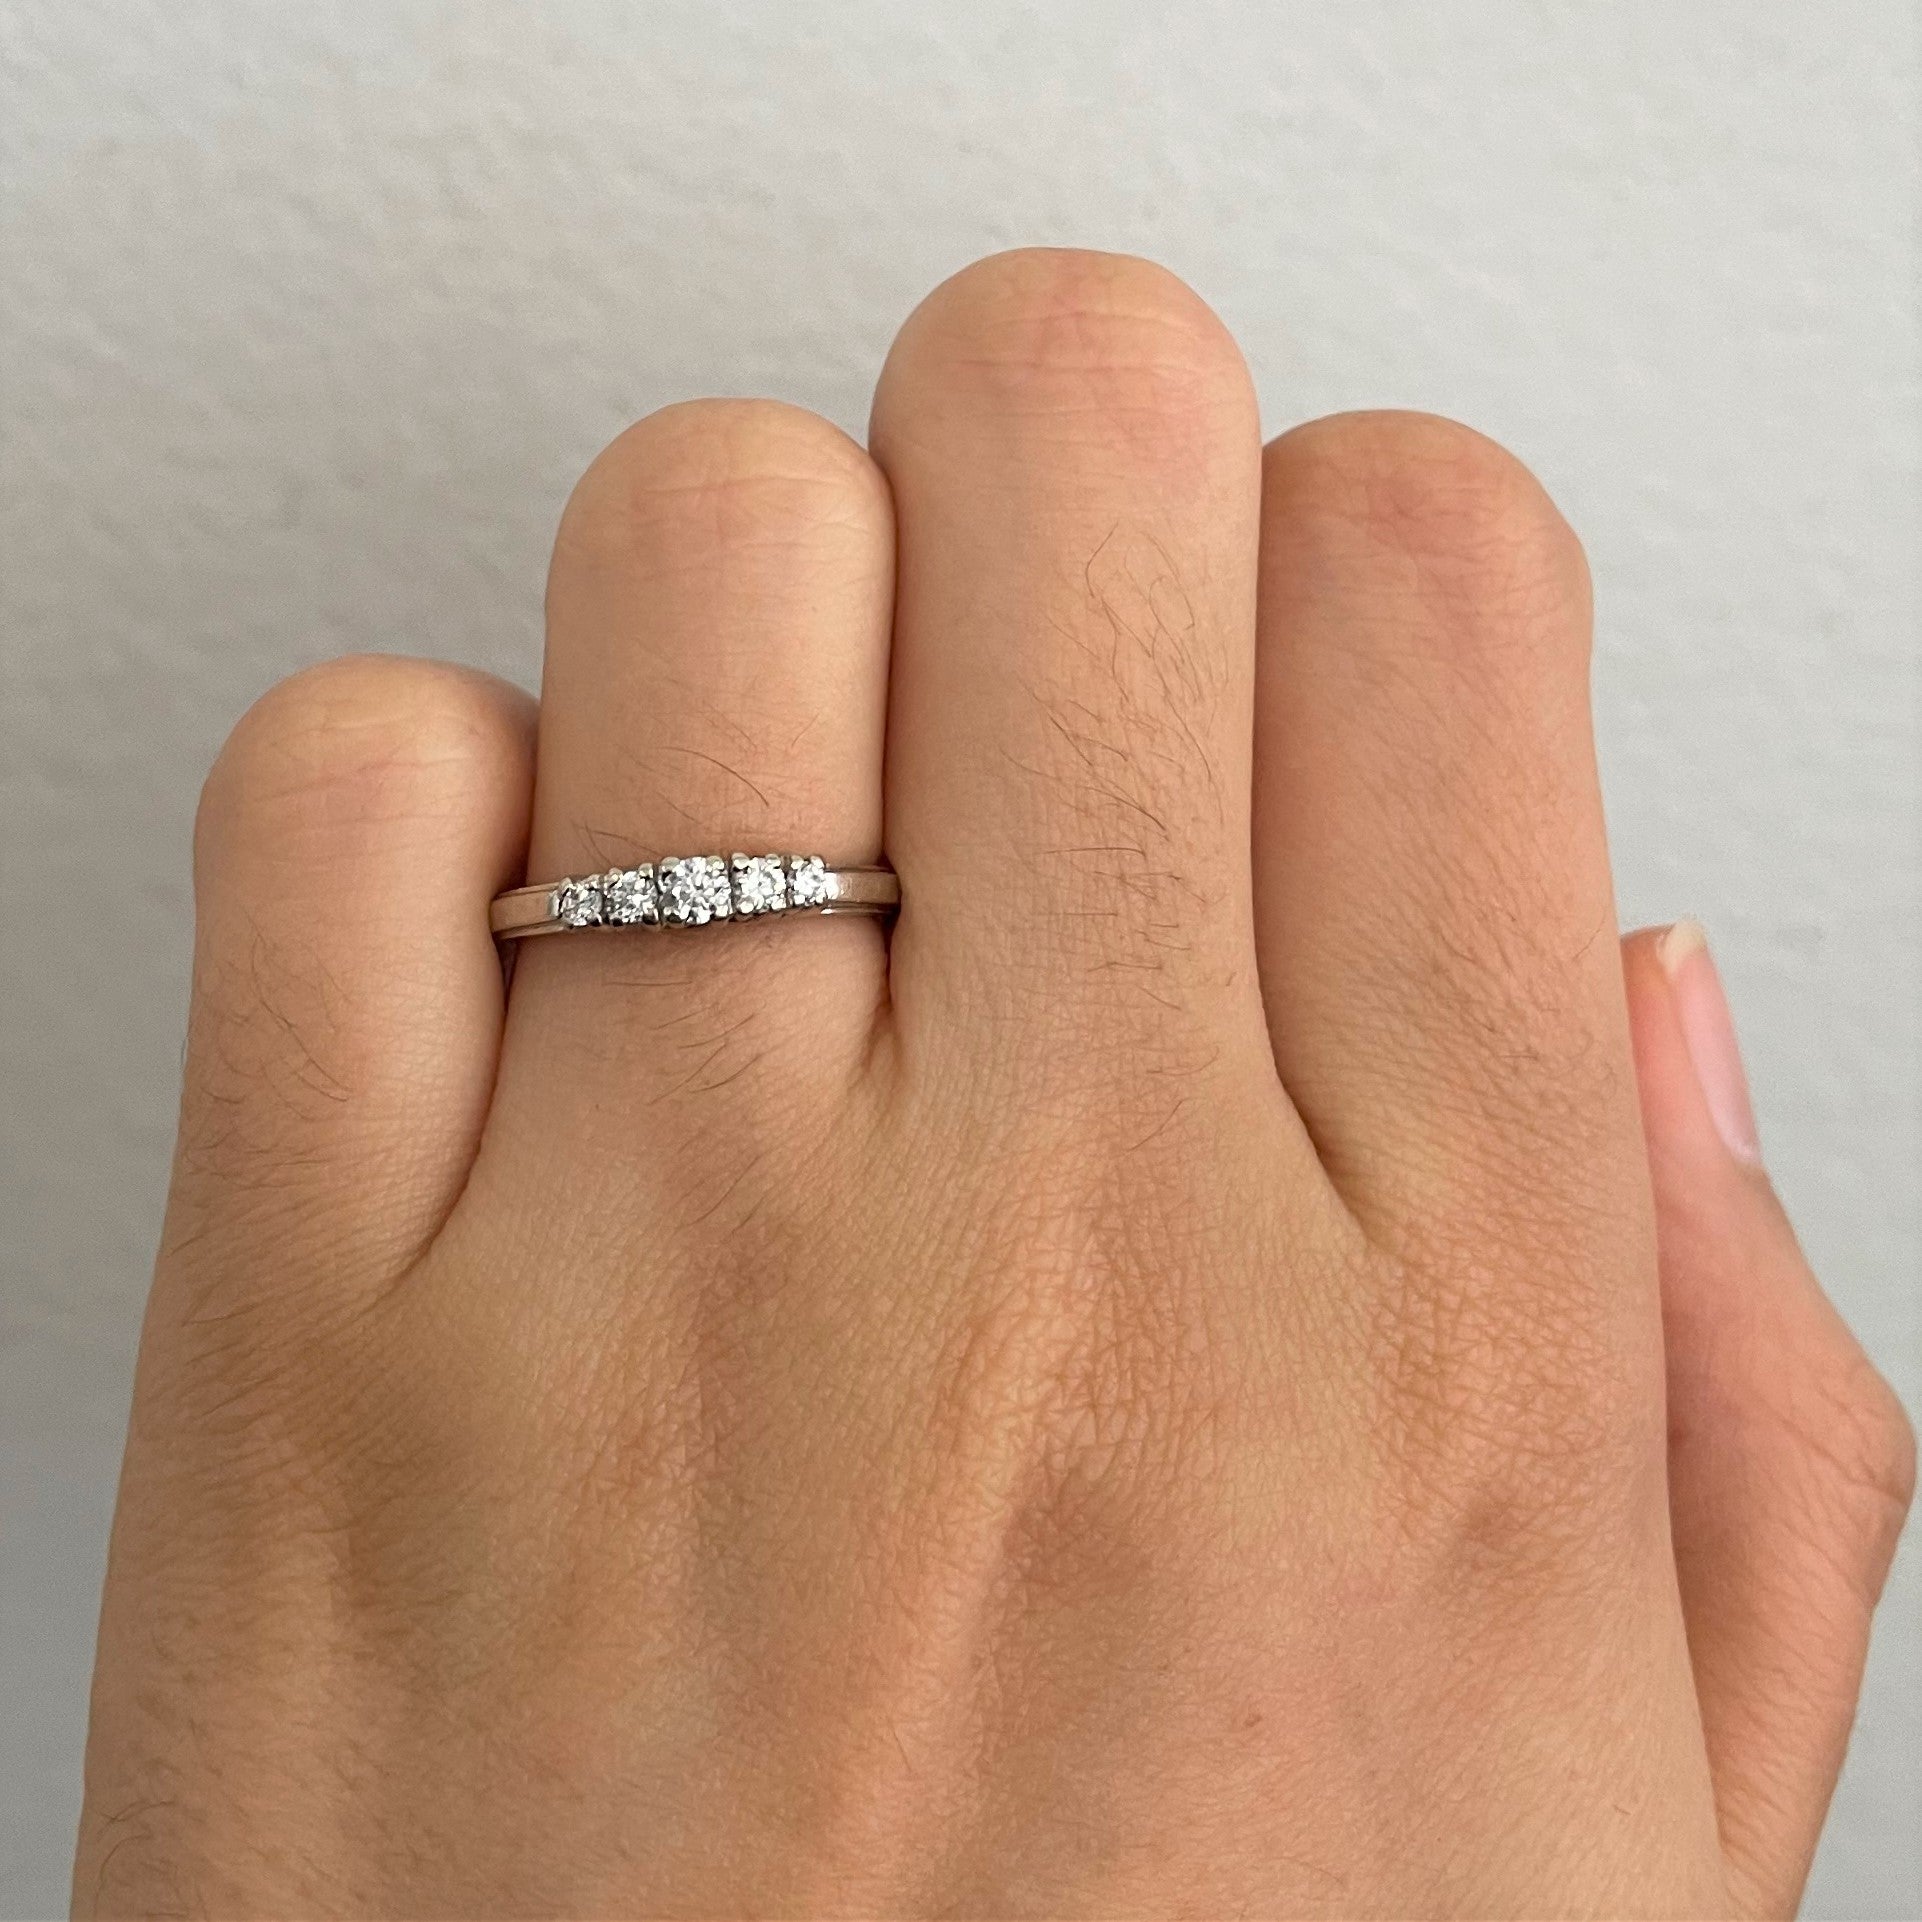 Graduated Five Stone Diamond Ring | 0.22ctw | SZ 5.75 |